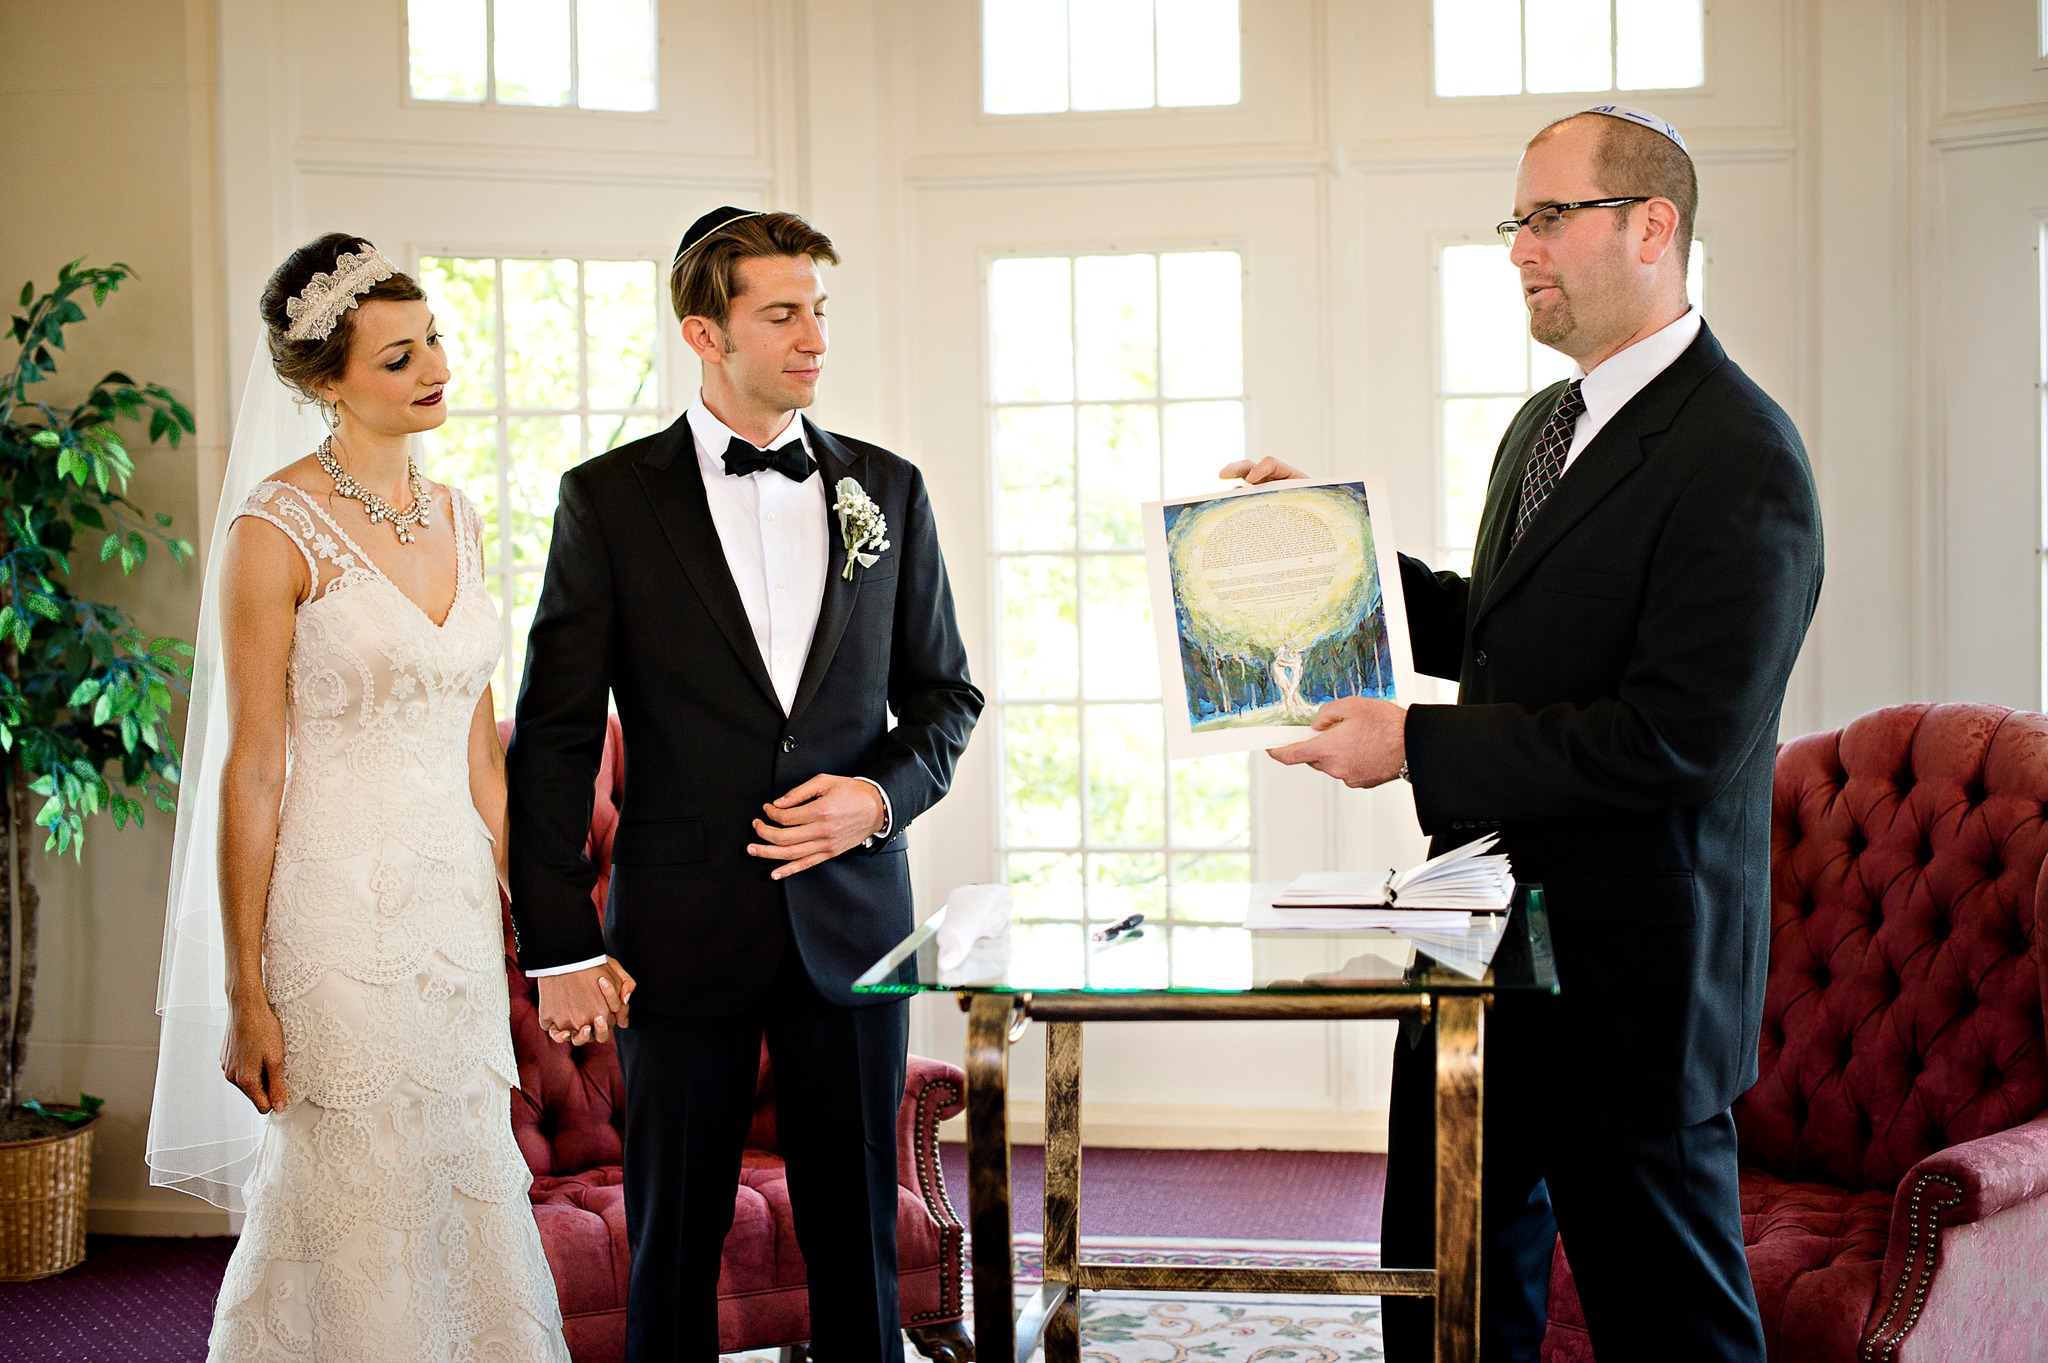 Rabbi for Jewish Wedding - Destination Weddings - Wedding Officiant